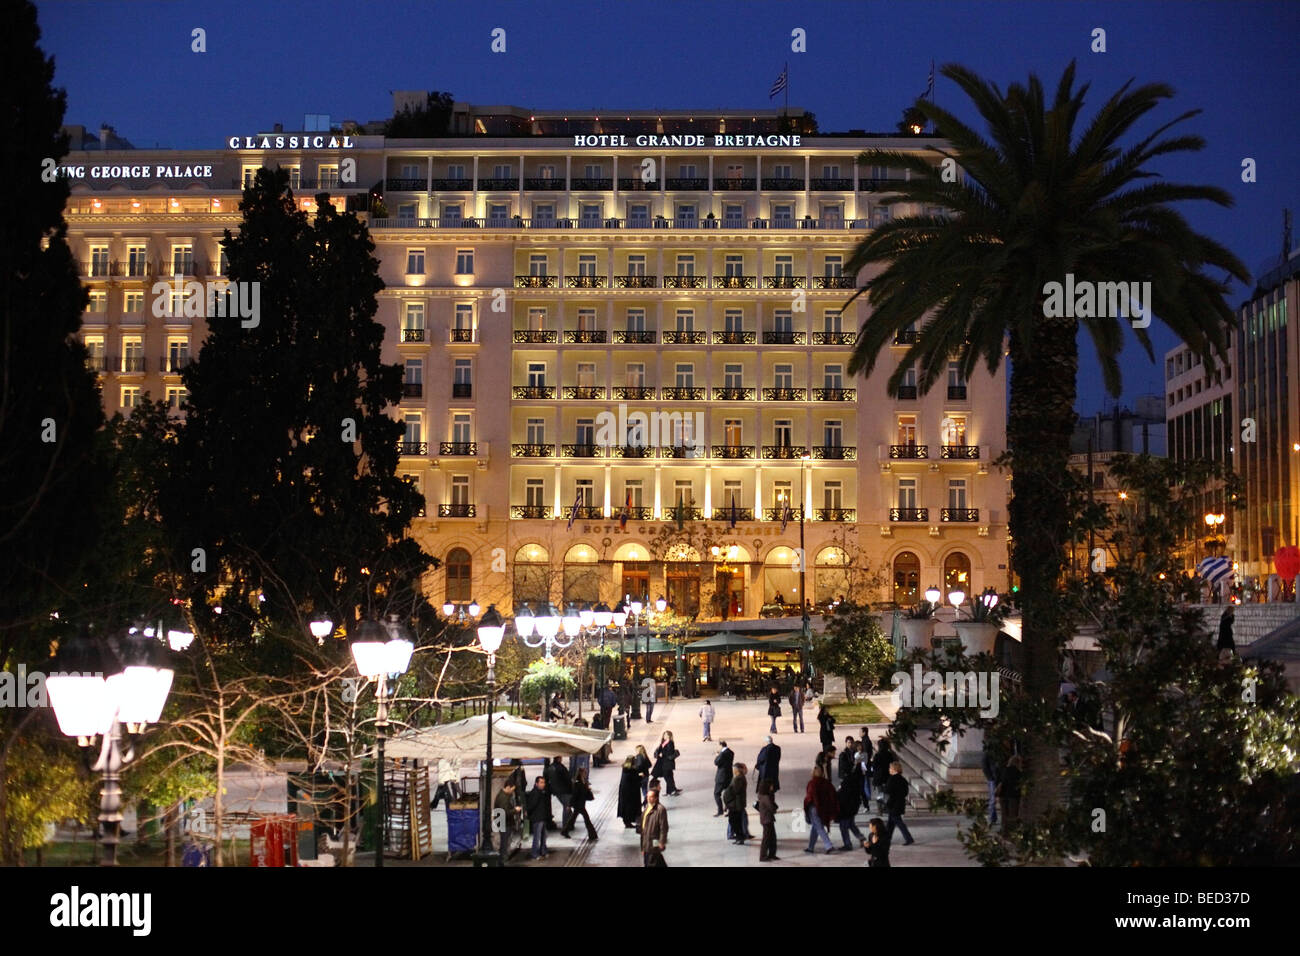 Grande Bretagne Hotel, Syntagma Square, Athens, Greece Stock Photo